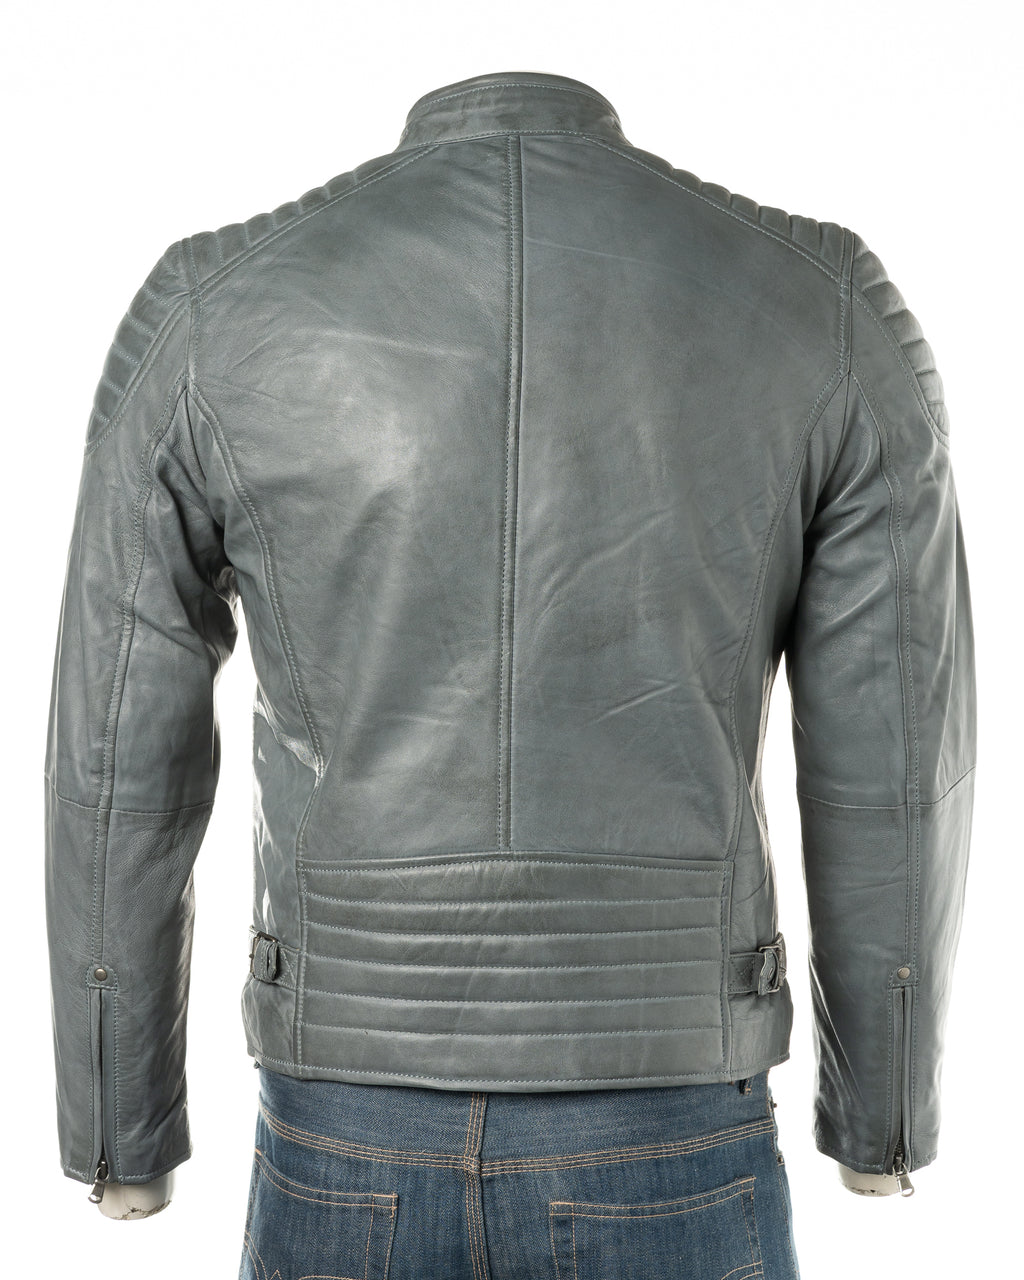 Men's Grey Racer Style Leather Jacket: Ennio